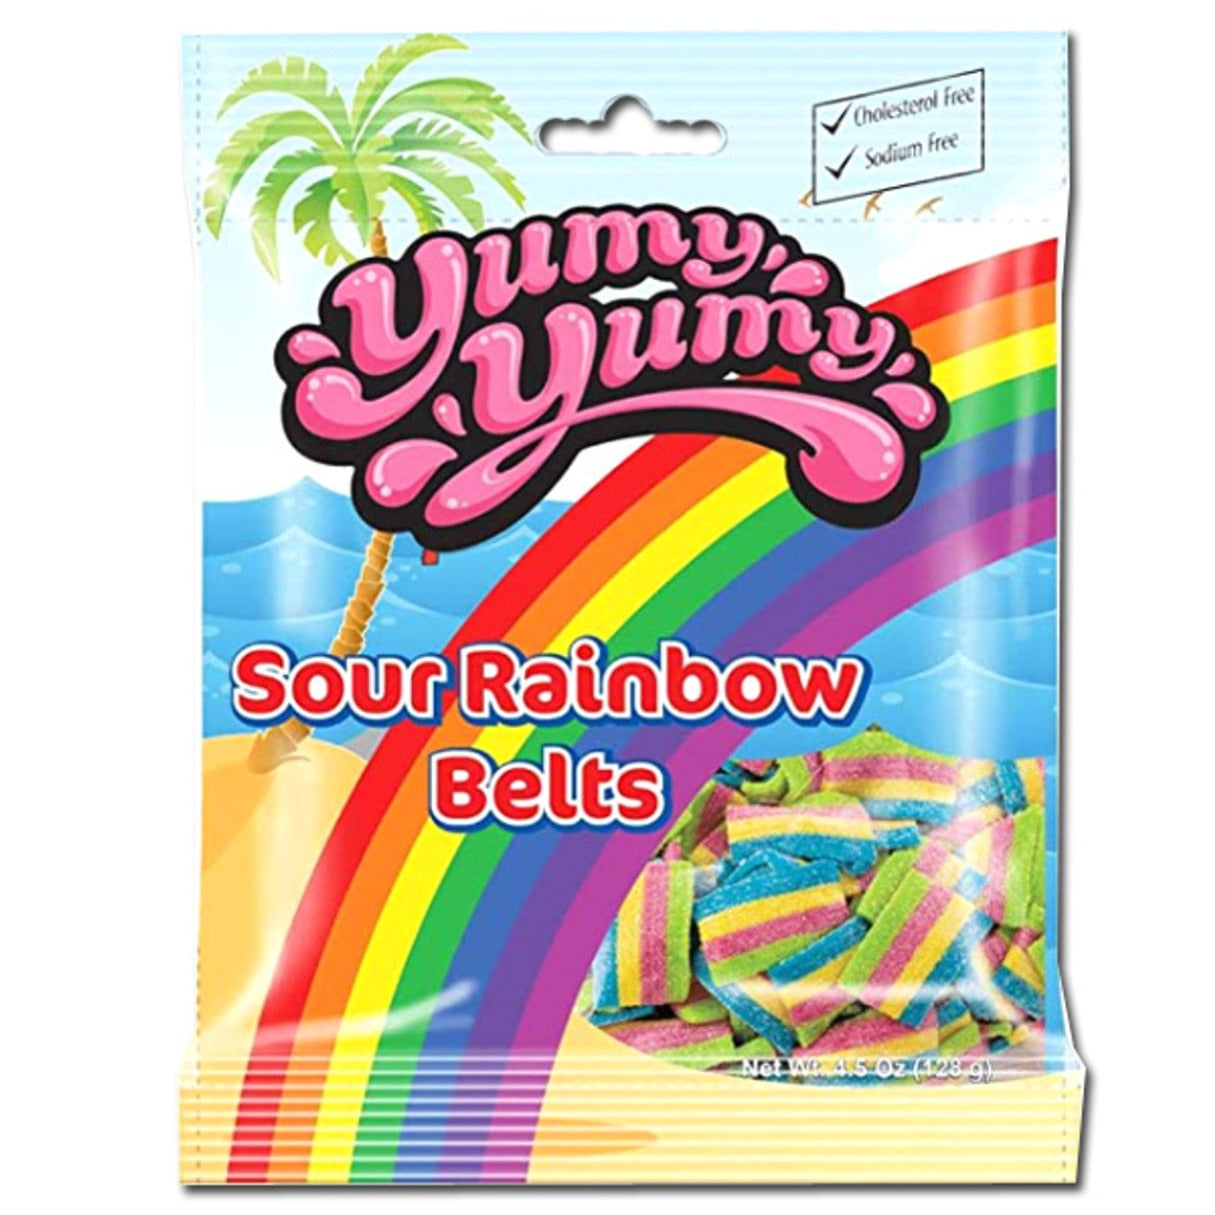 Kervan Yummy Yummy Sour Rainbow Belts 4.5oz - 12ct